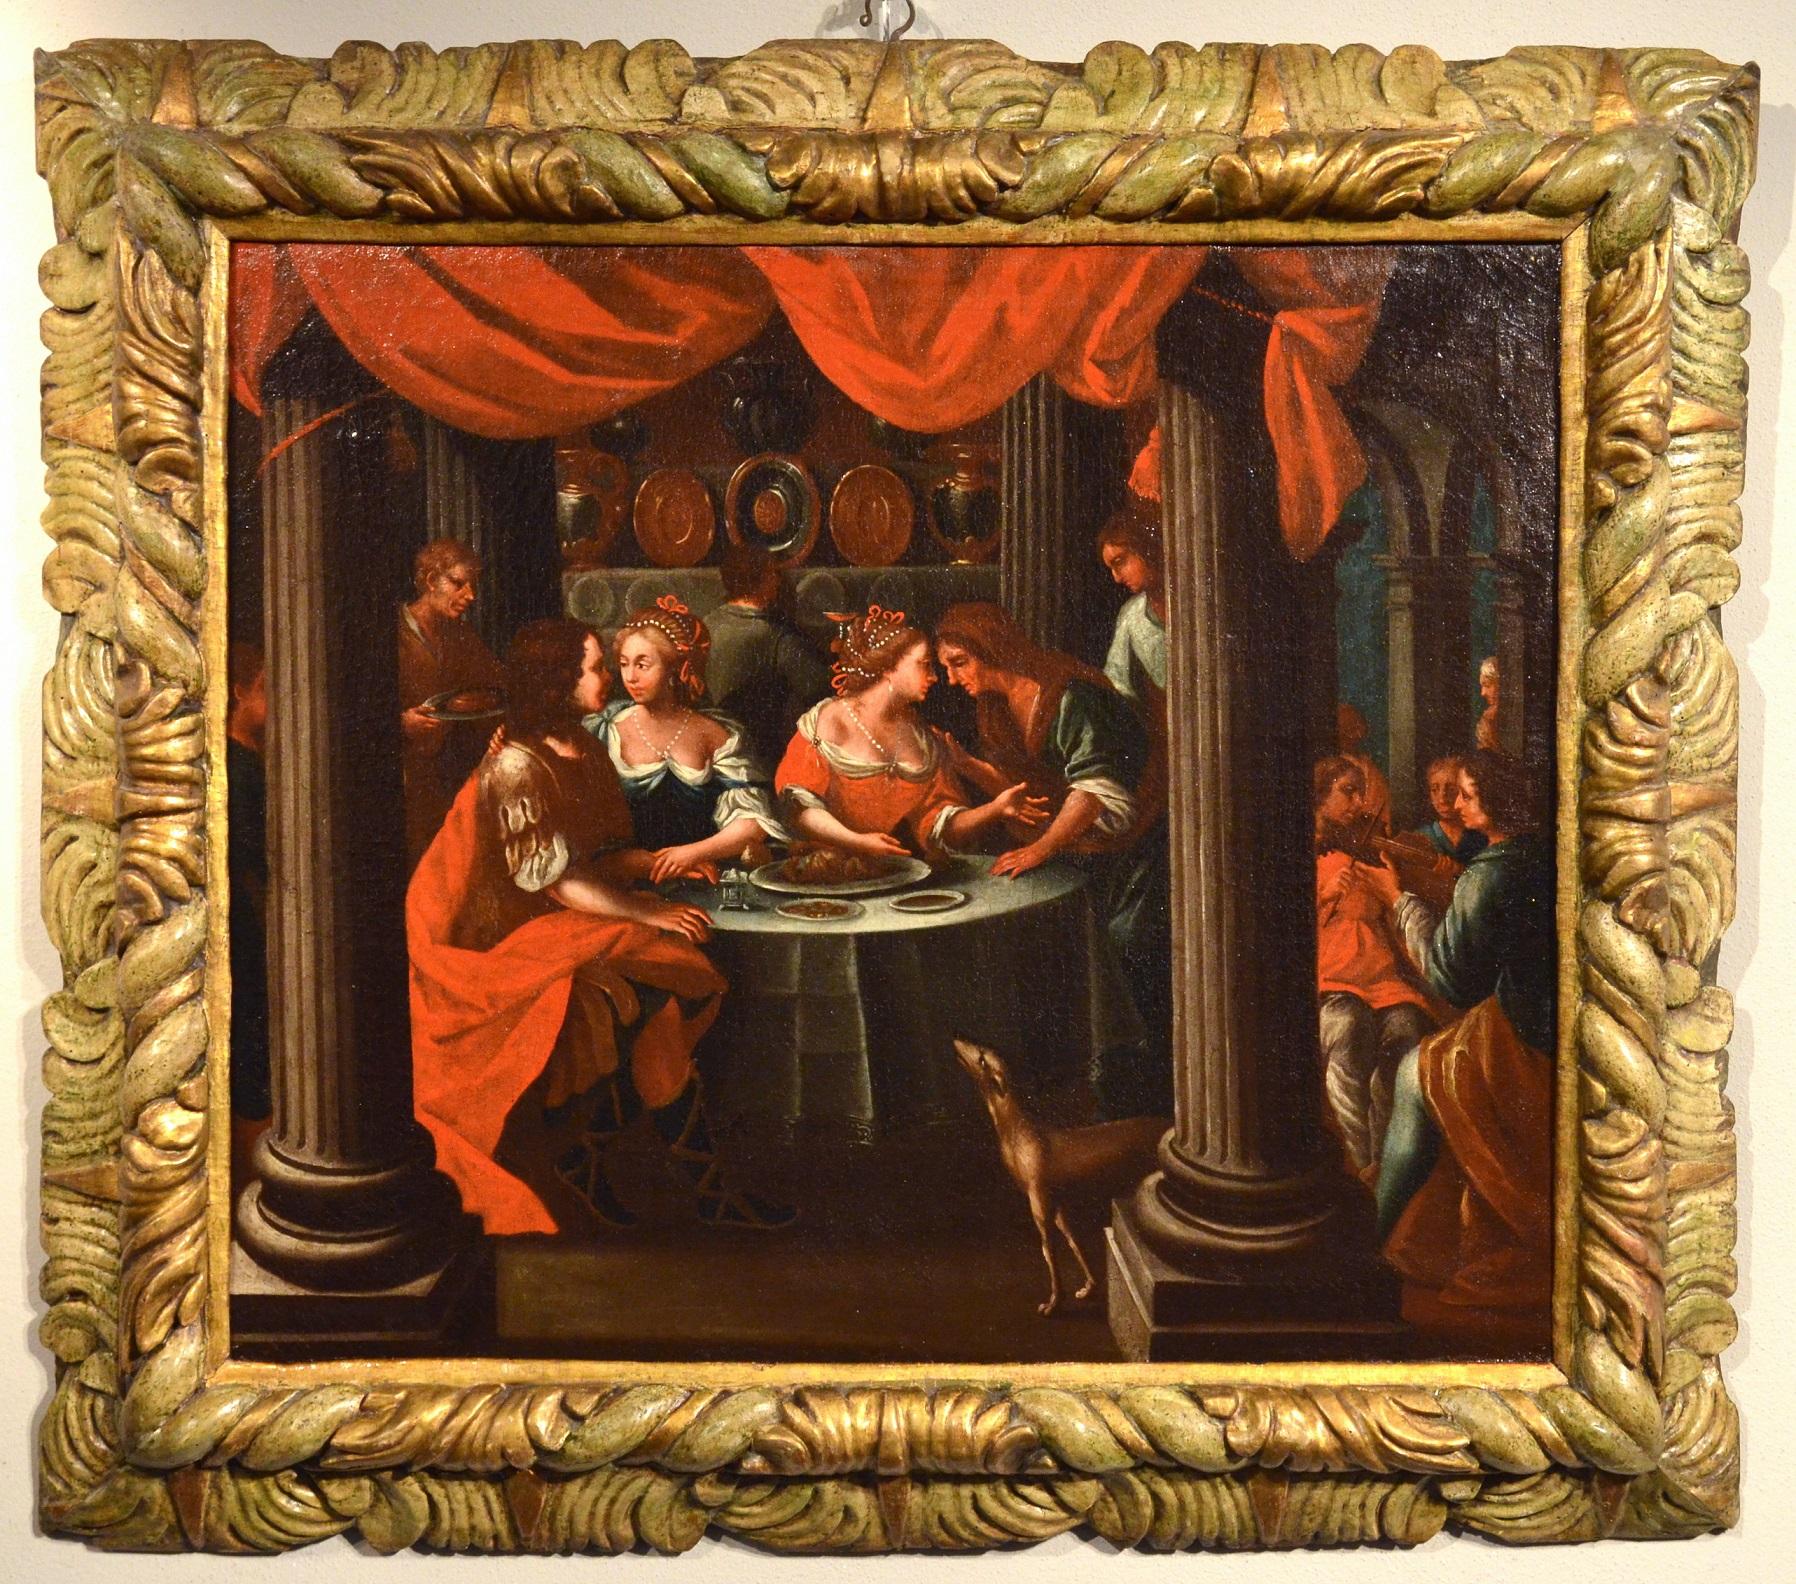 Banquet Flemish Italian Paint Oil on canvas Old master 17th Century Veronese Art